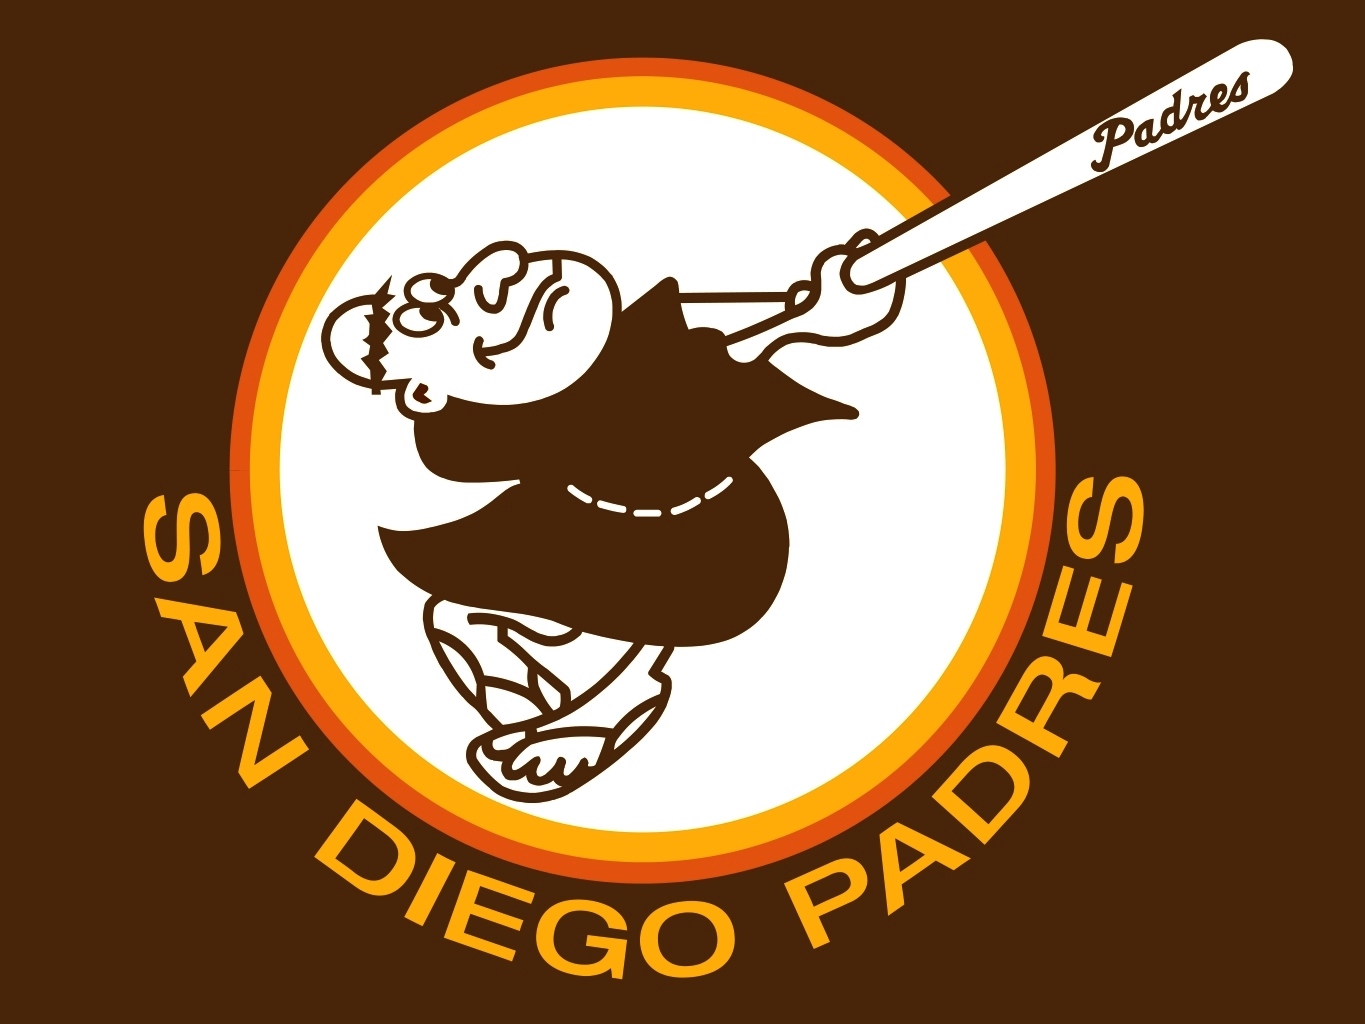 39+] San Diego Padres Wallpaper on WallpaperSafari